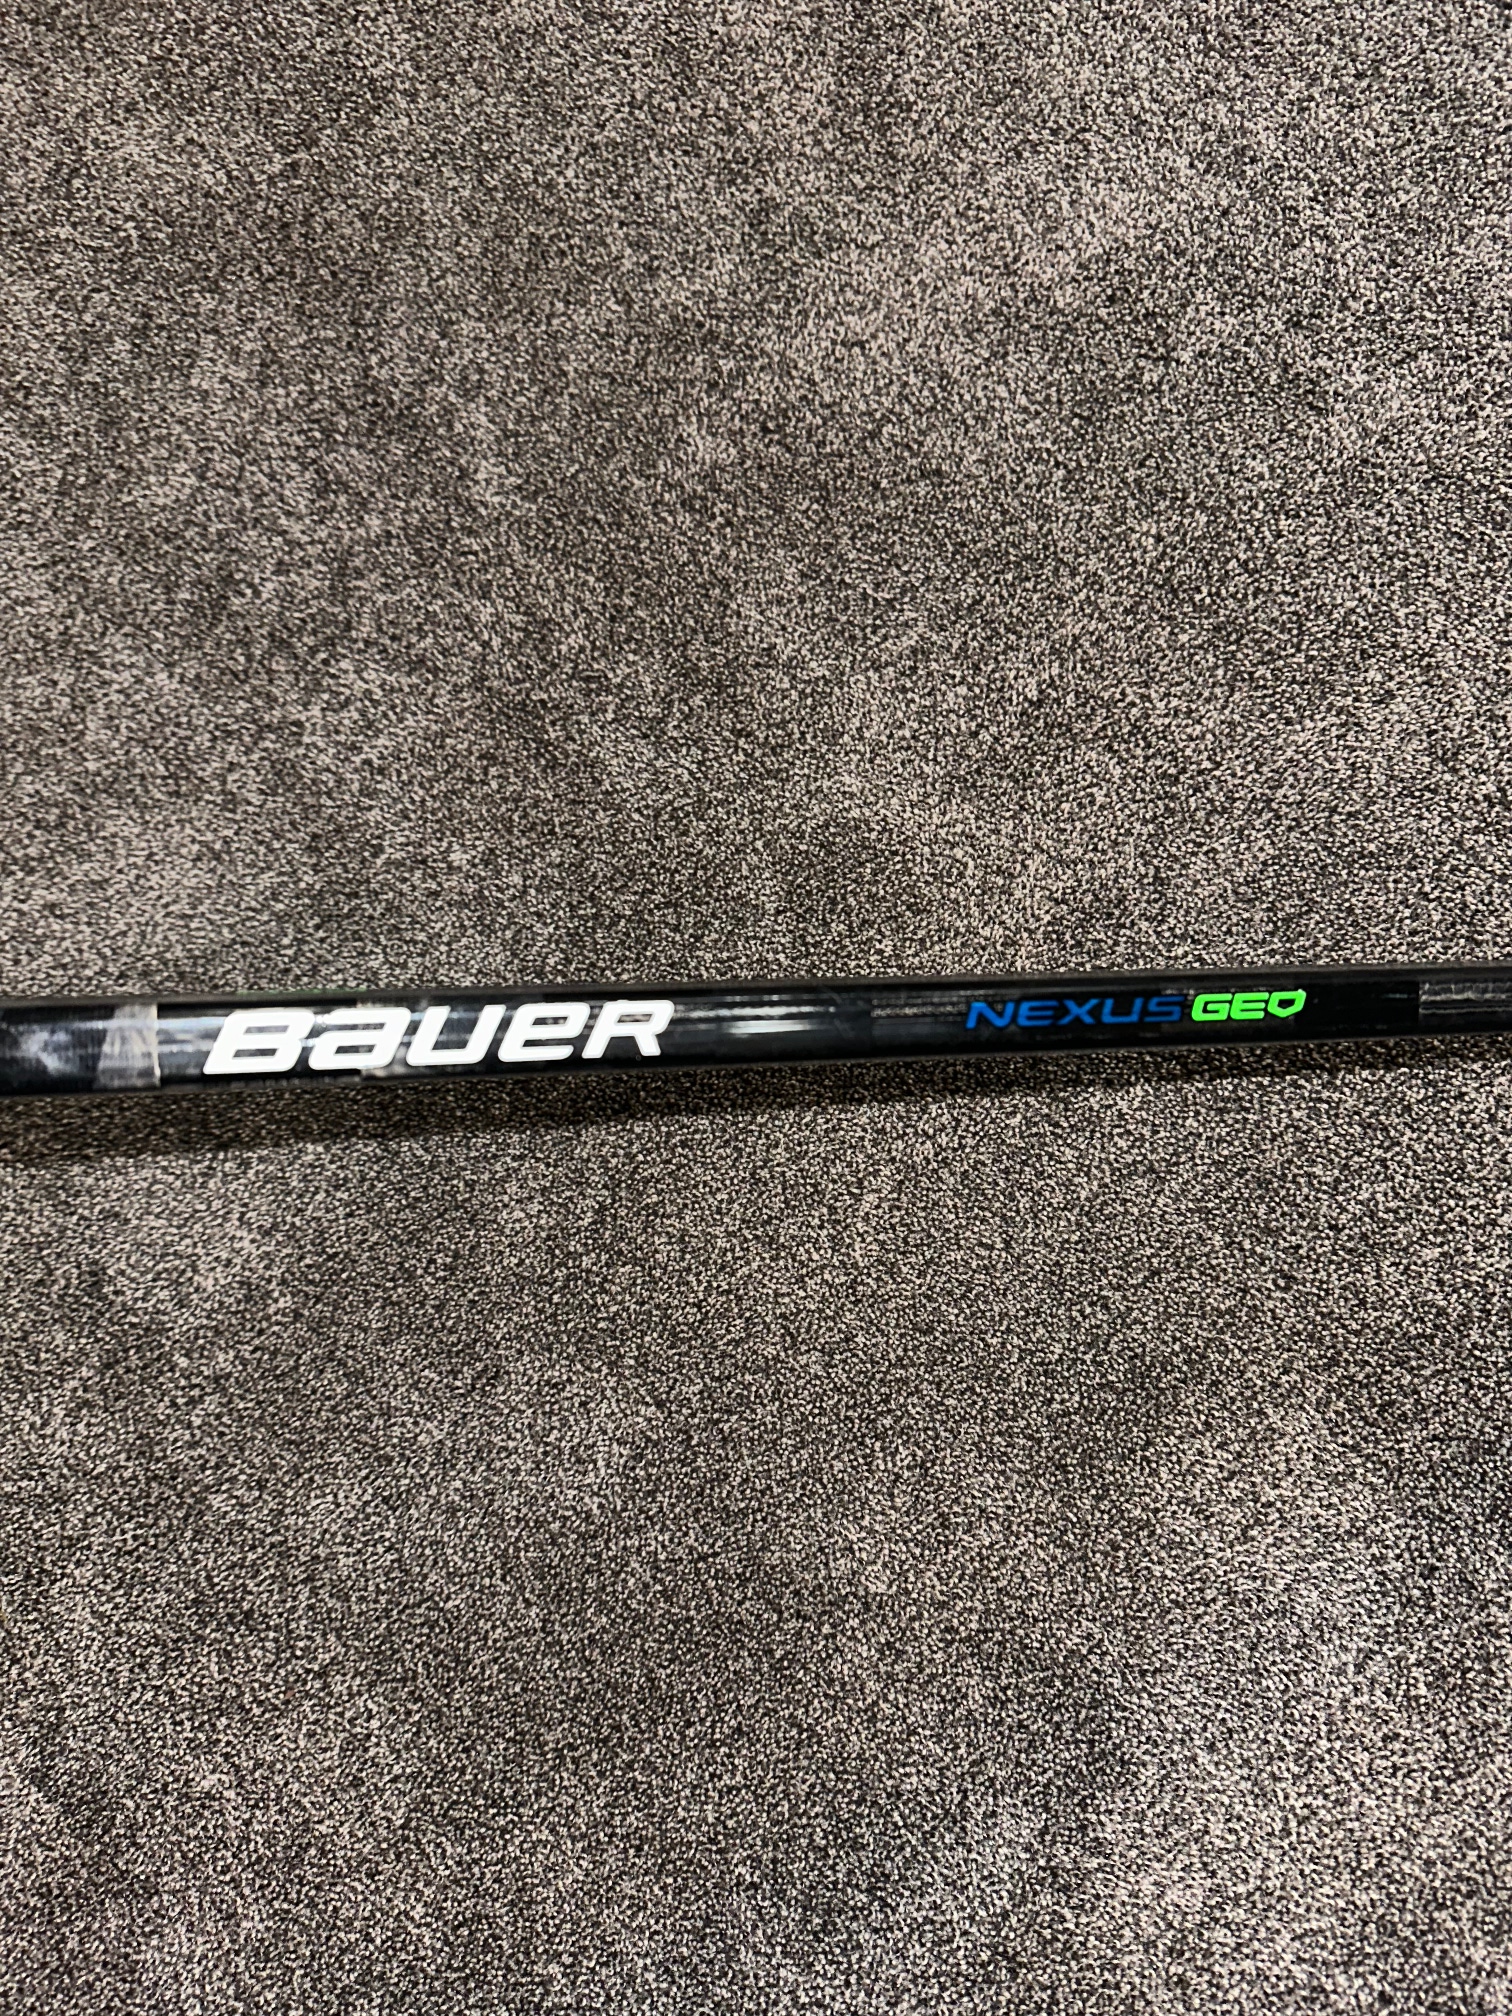 Used Bauer Right Handed Nexus Geo Hockey Stick P28